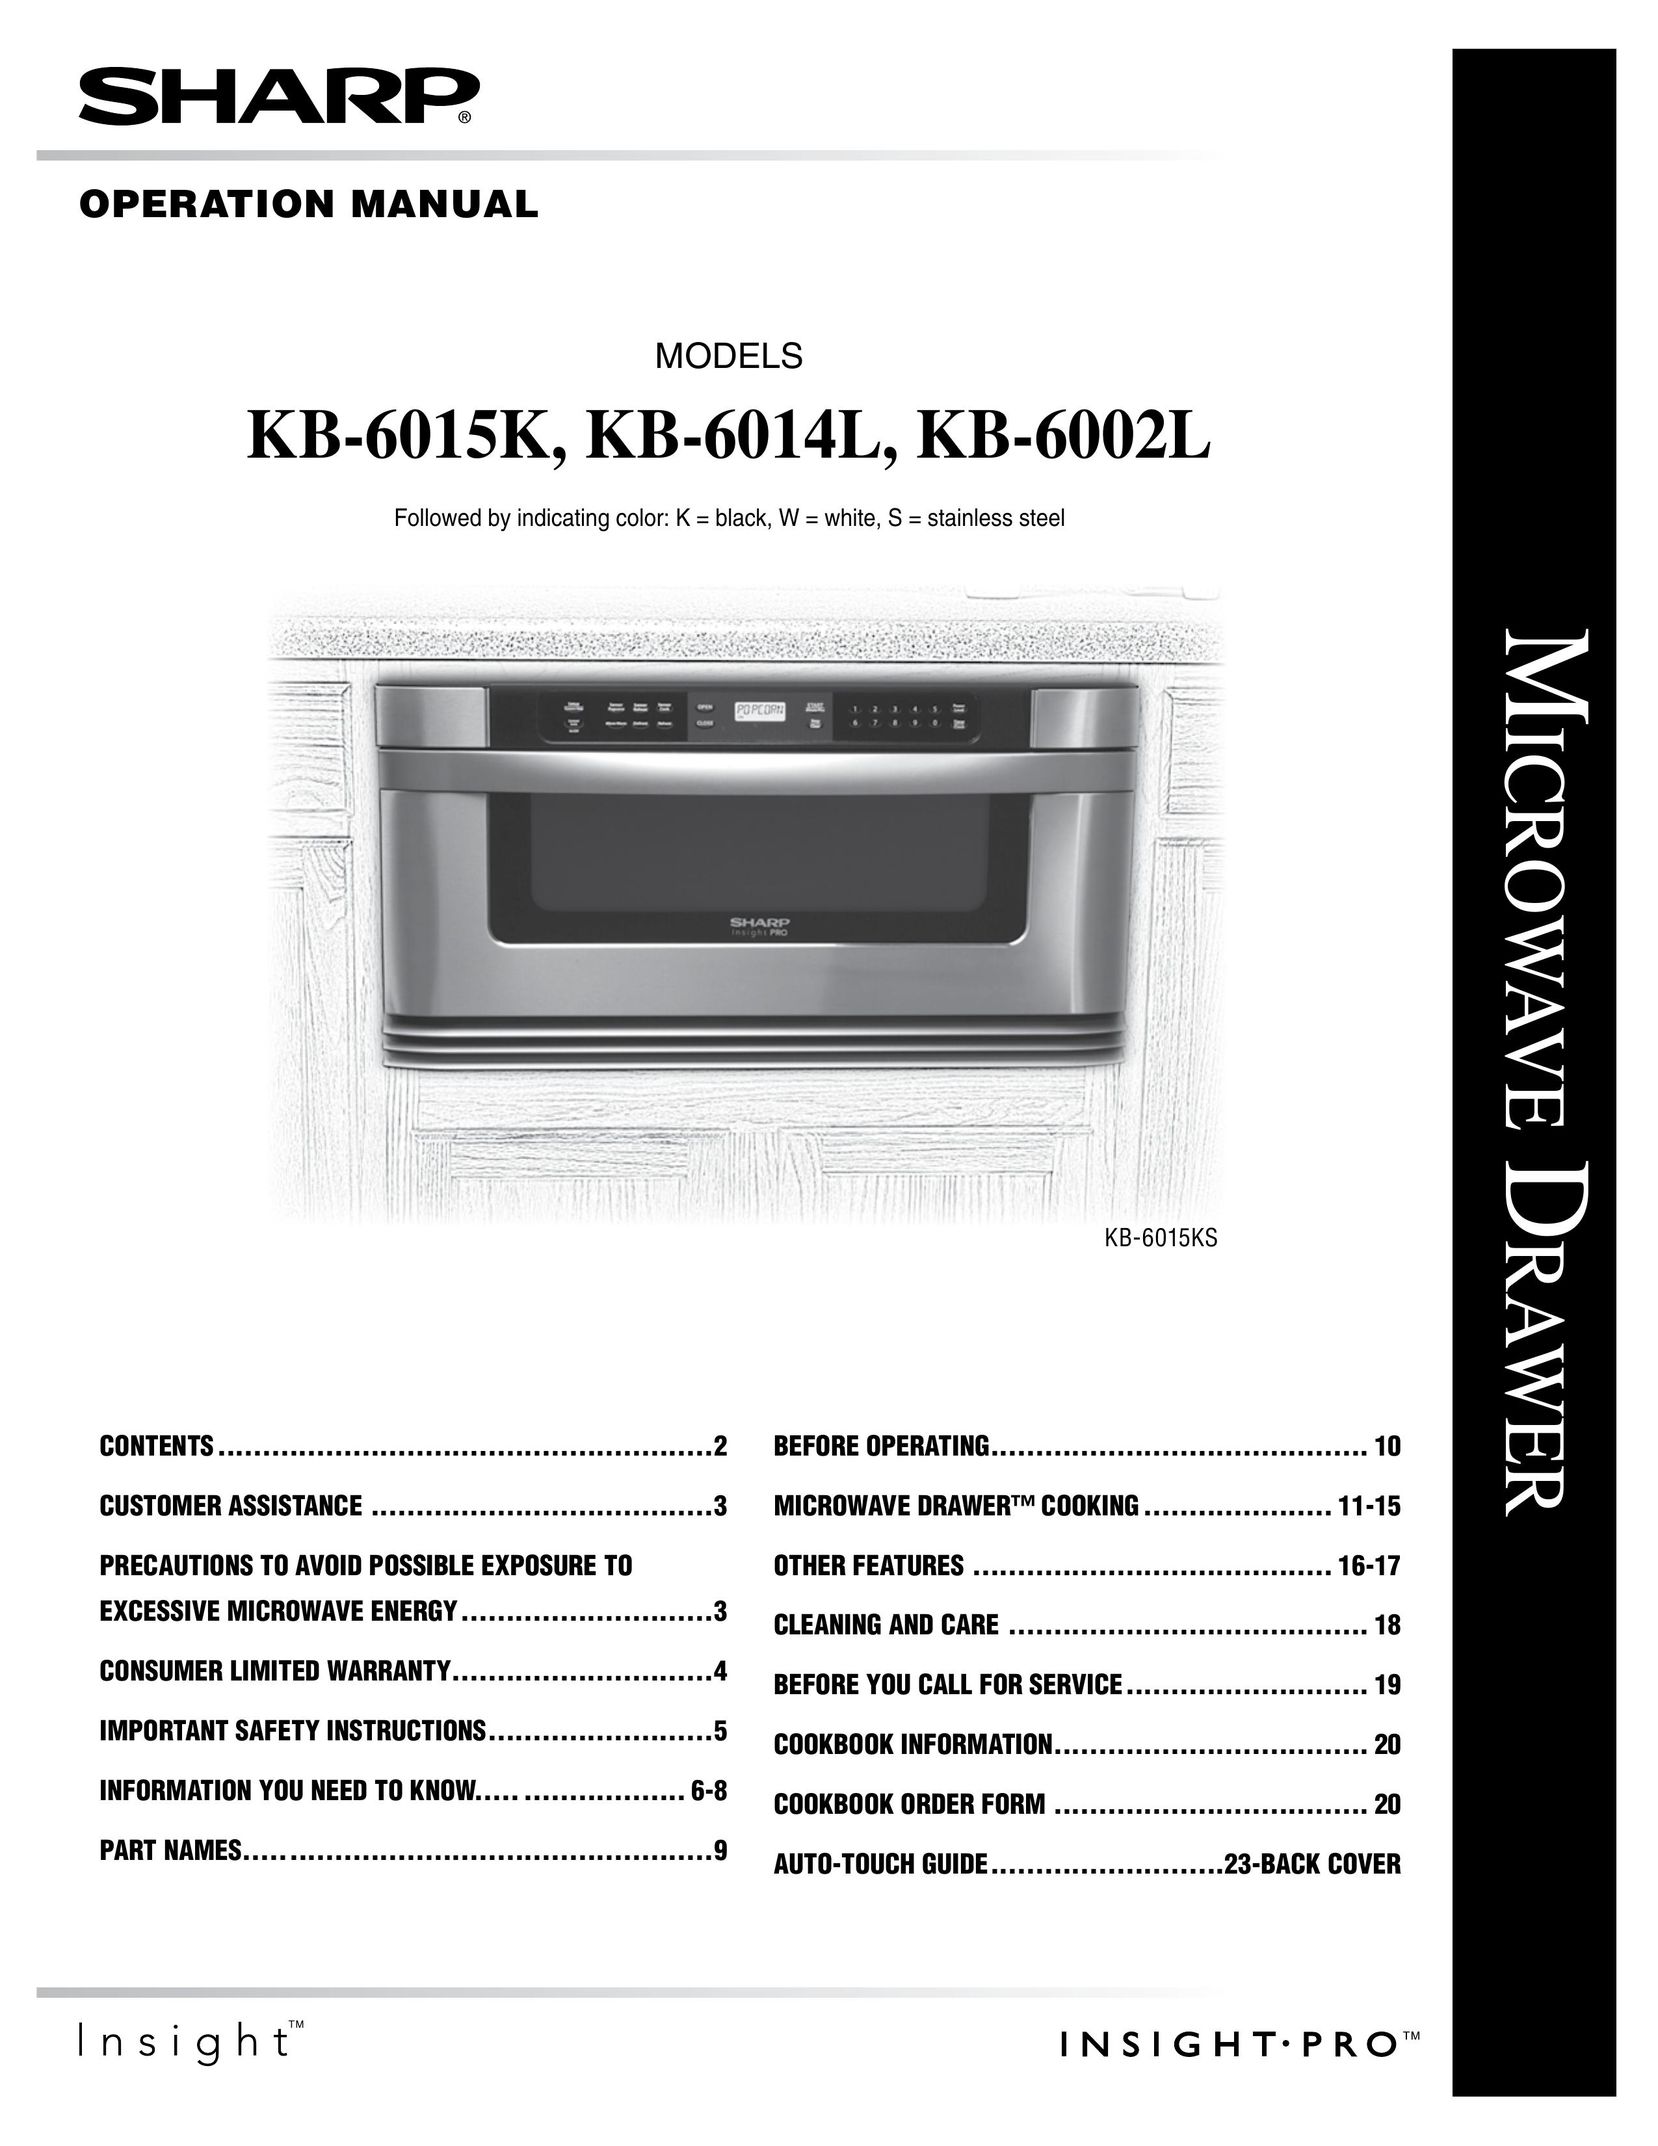 Sharp KB-6015K Microwave Oven User Manual